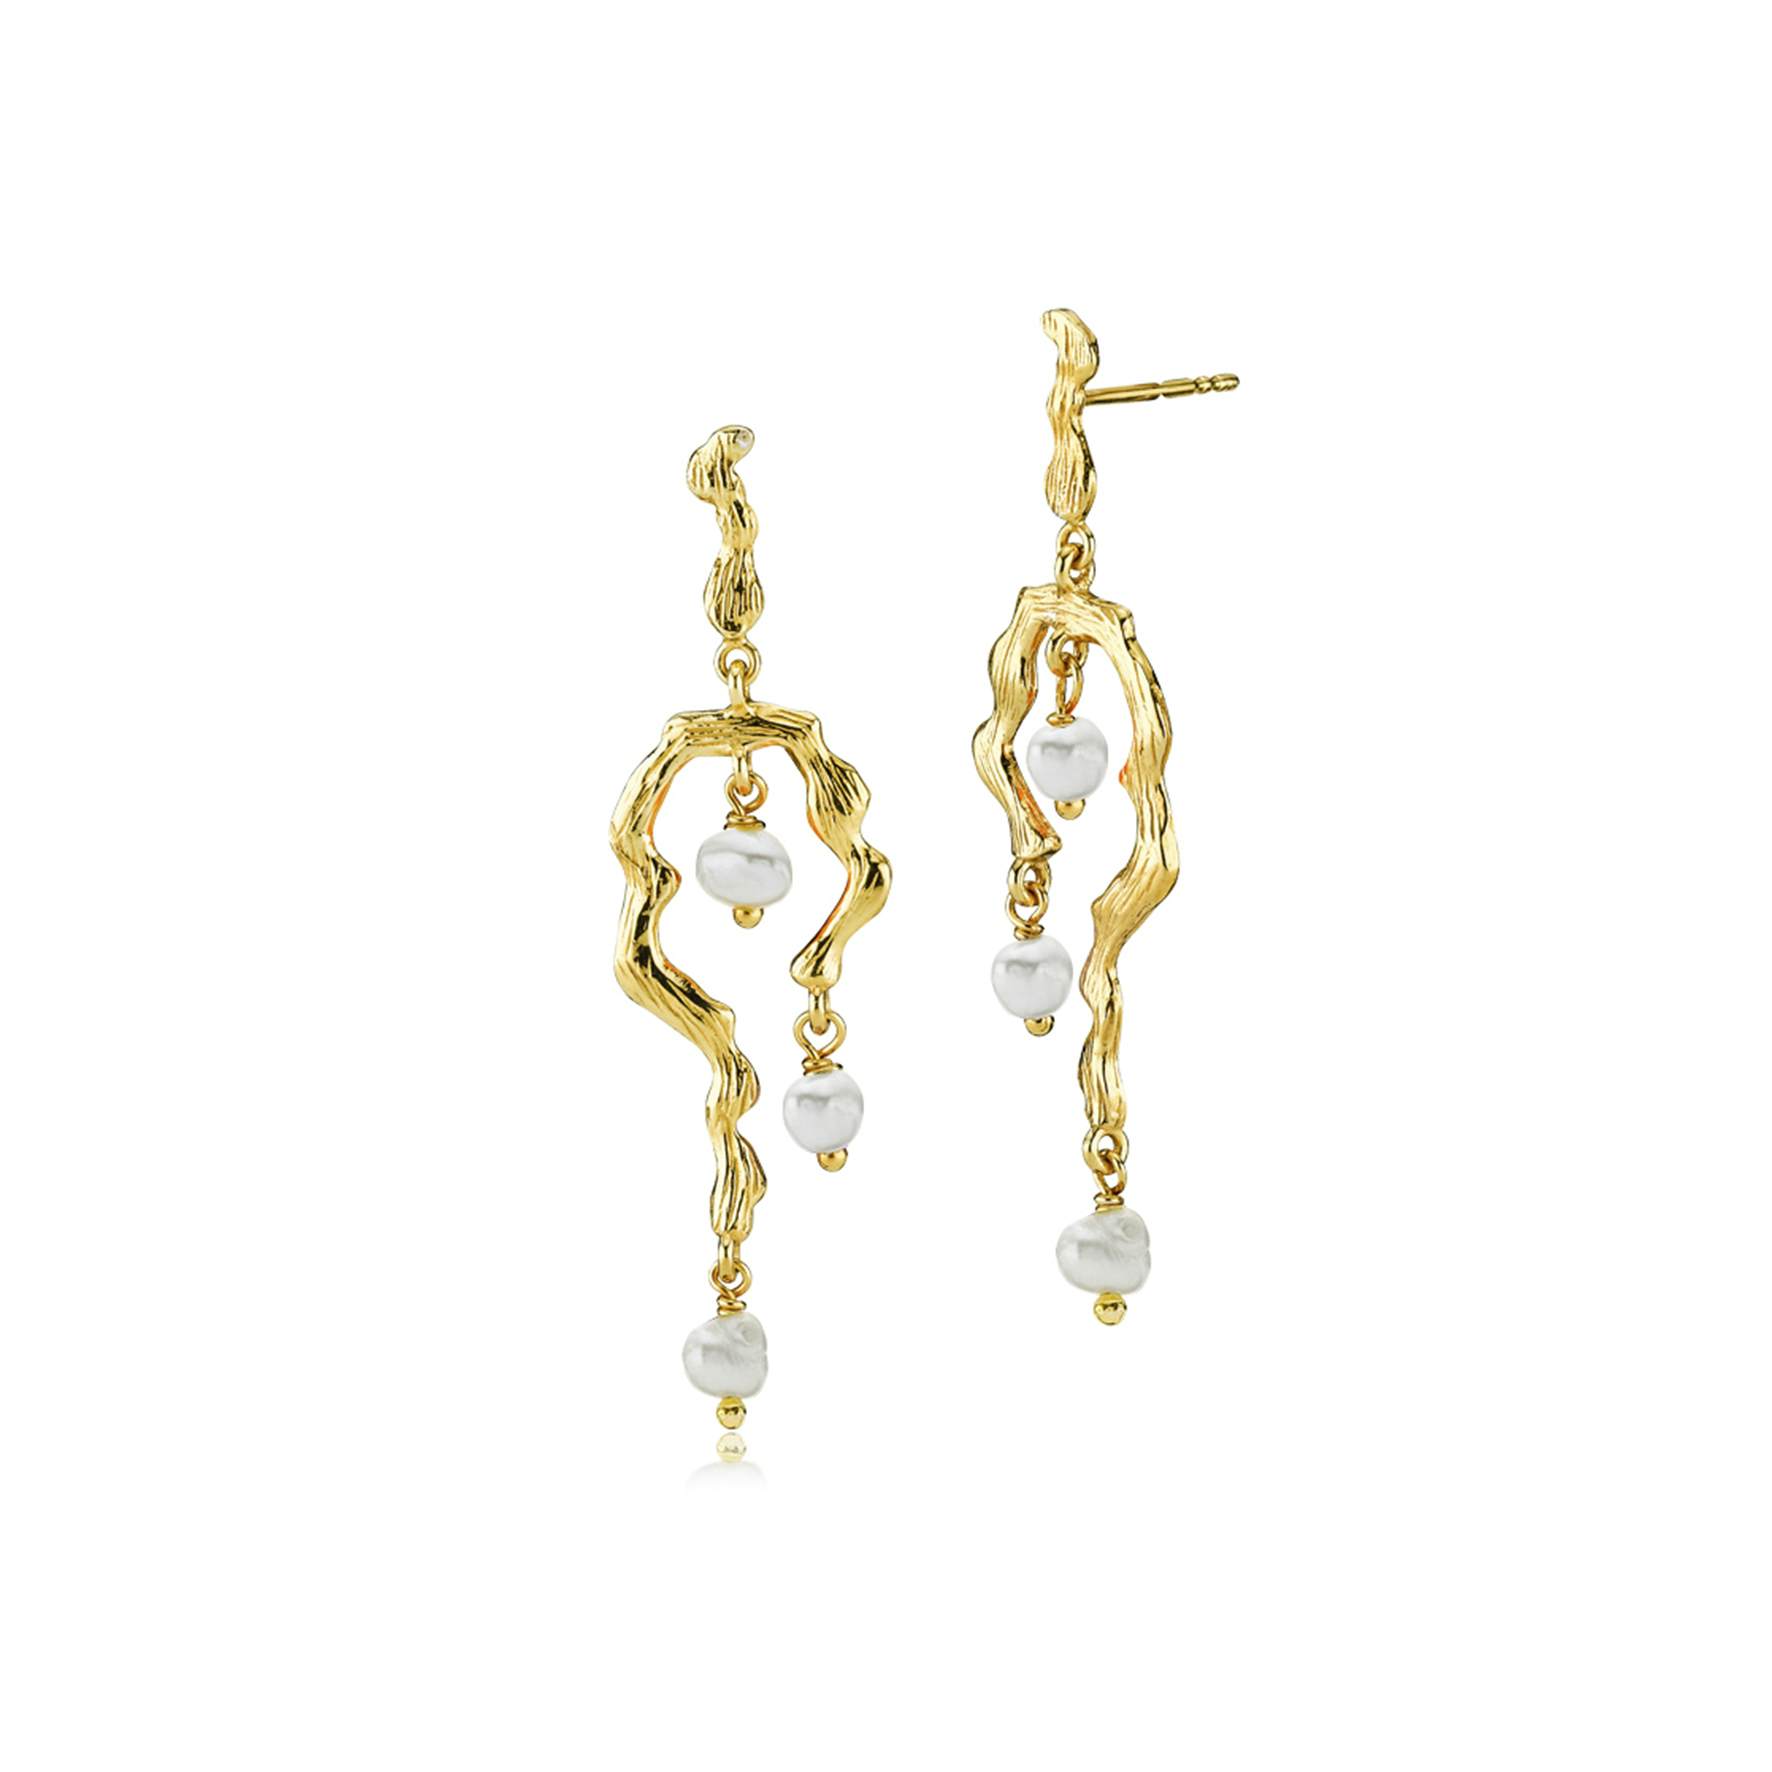 Lærke Bentsen By Sistie Long Earrings With Pearls fra Sistie i Forgyldt-Sølv Sterling 925|Freshwater Pearl